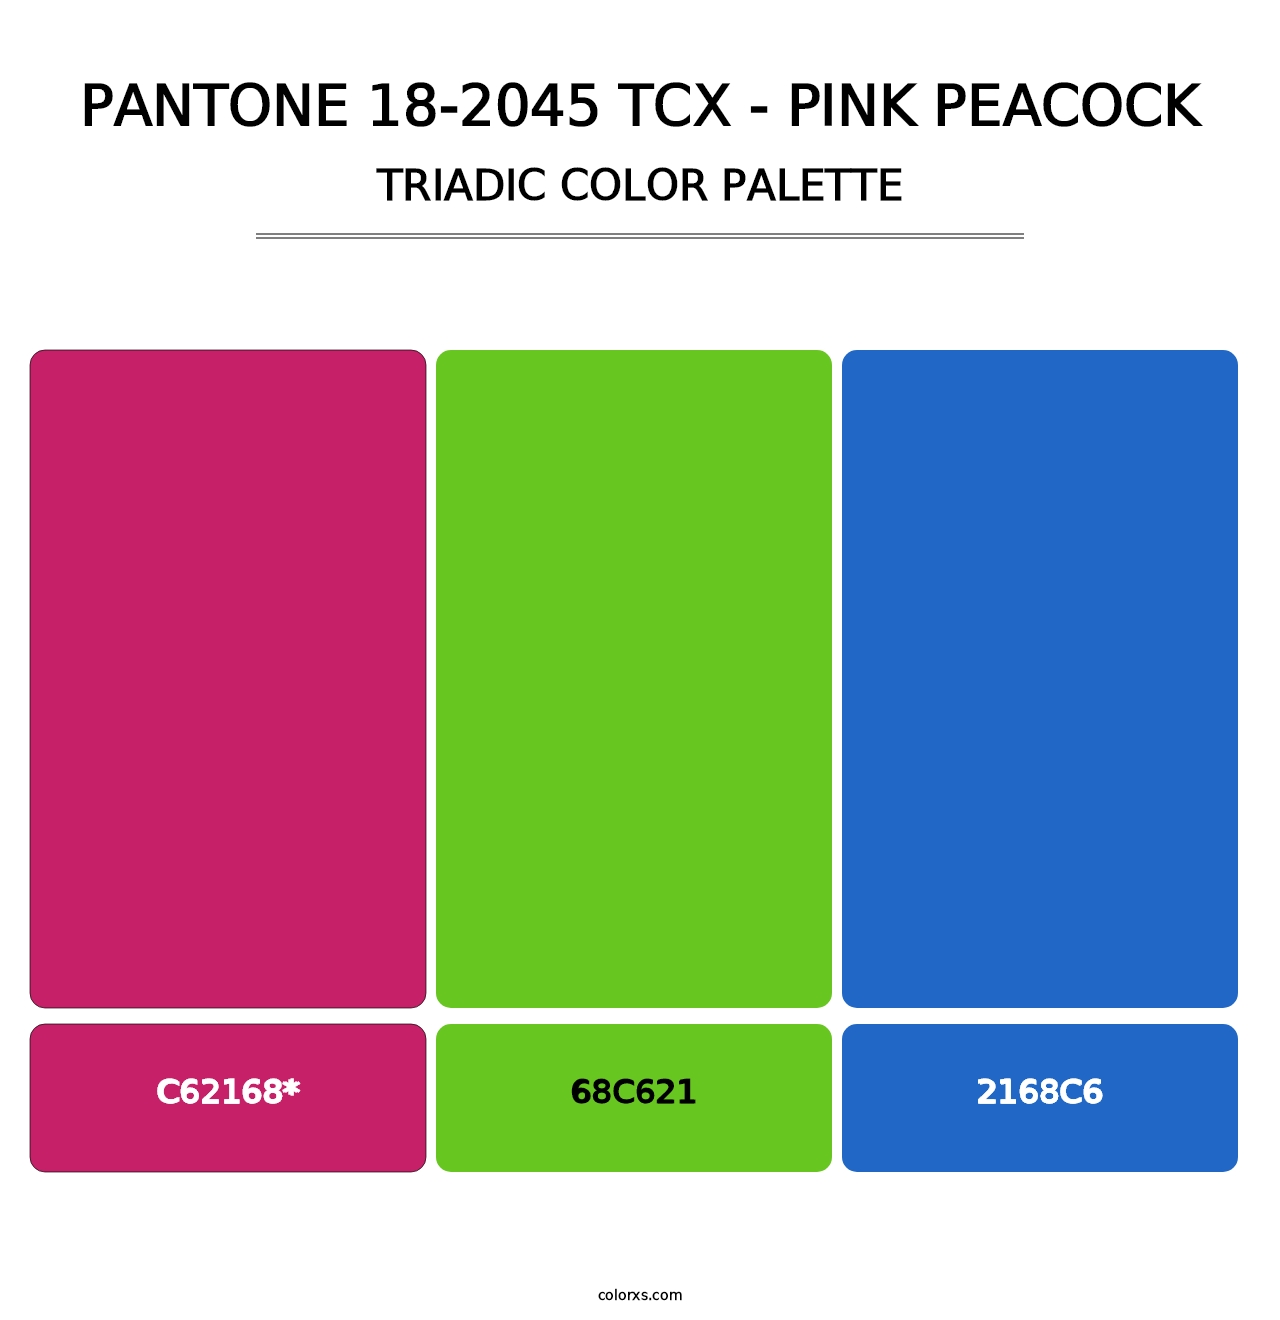 PANTONE 18-2045 TCX - Pink Peacock - Triadic Color Palette